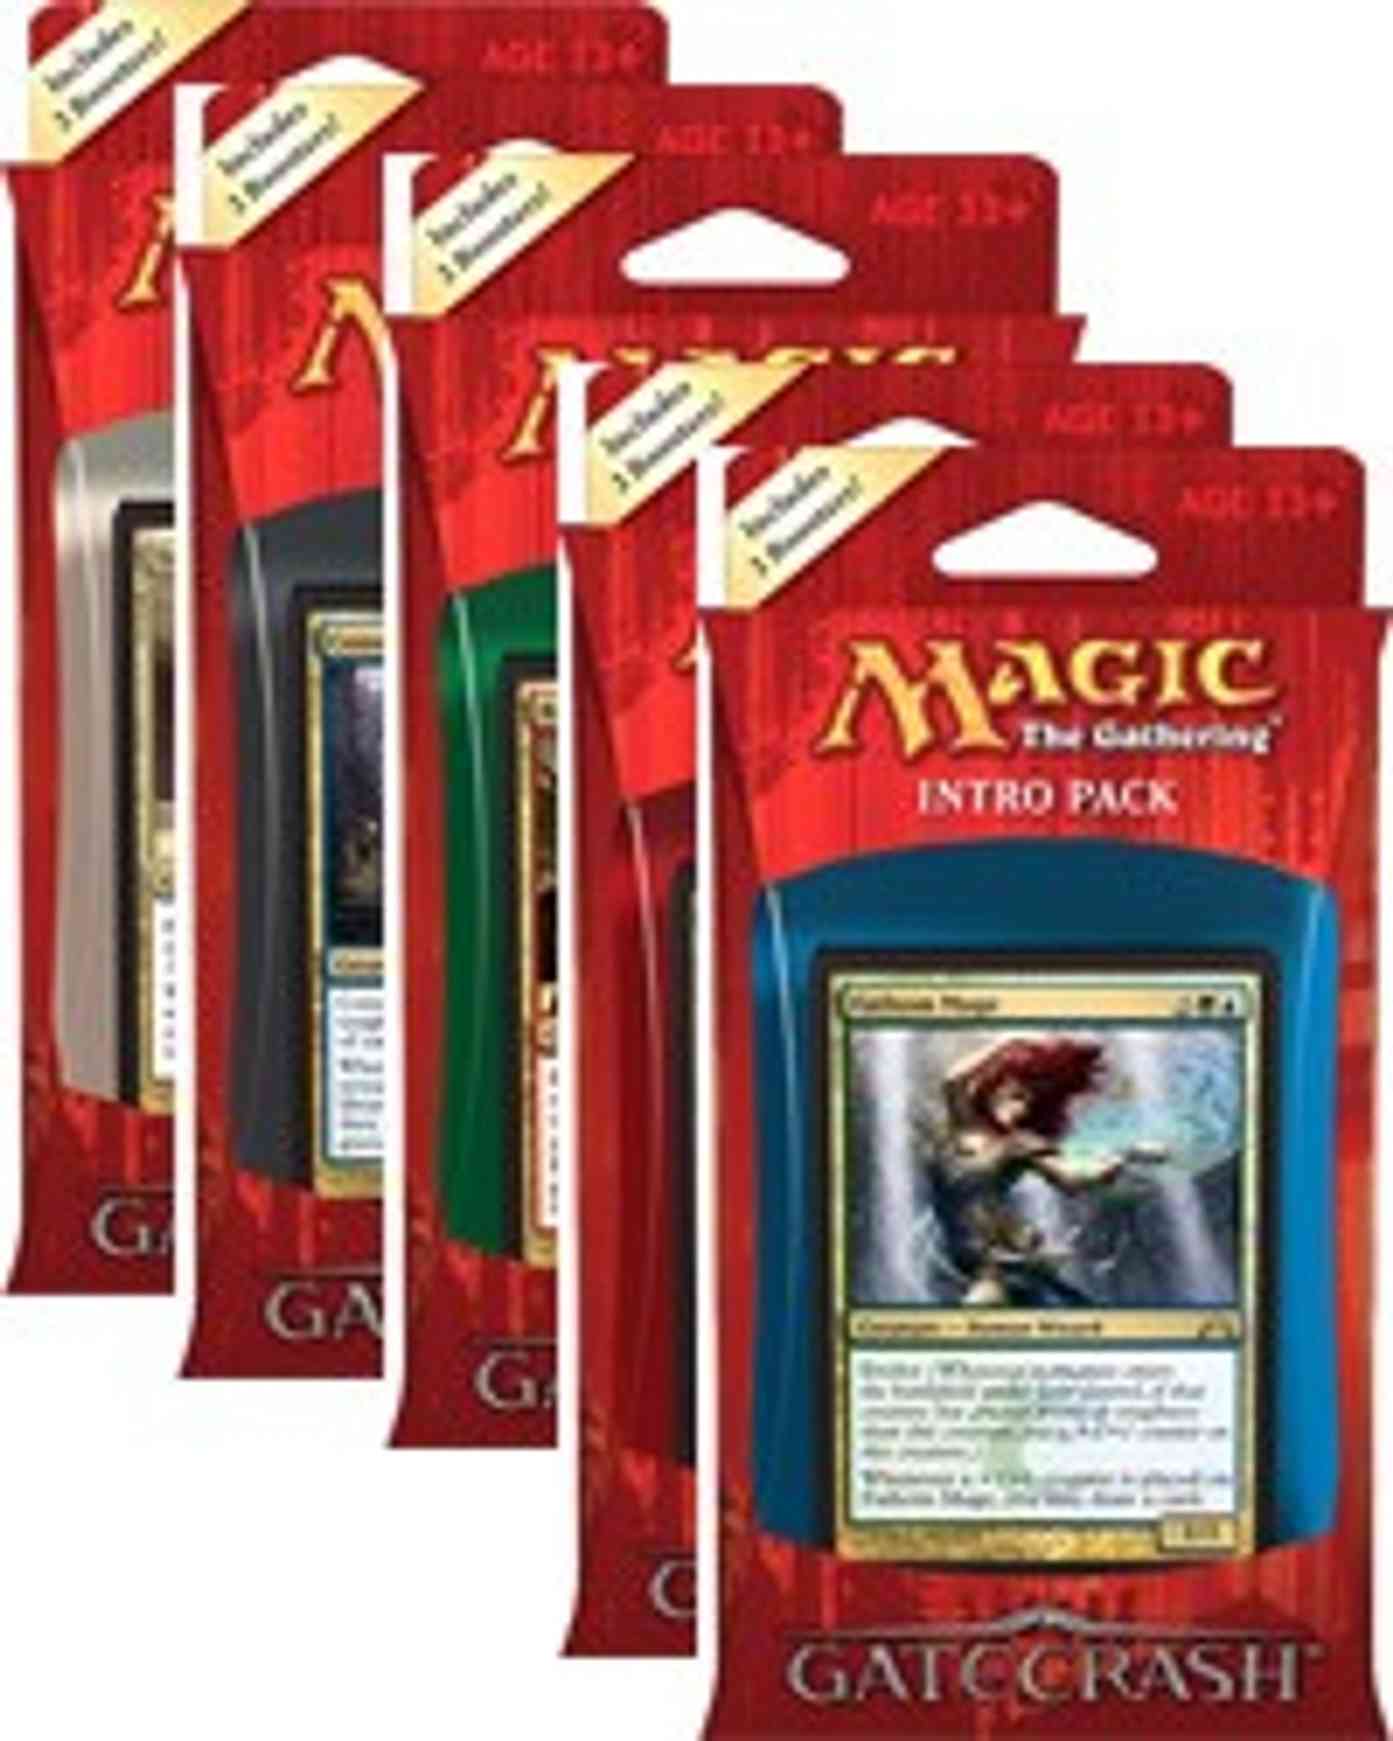 Gatecrash - All 5 Intro Packs magic card front